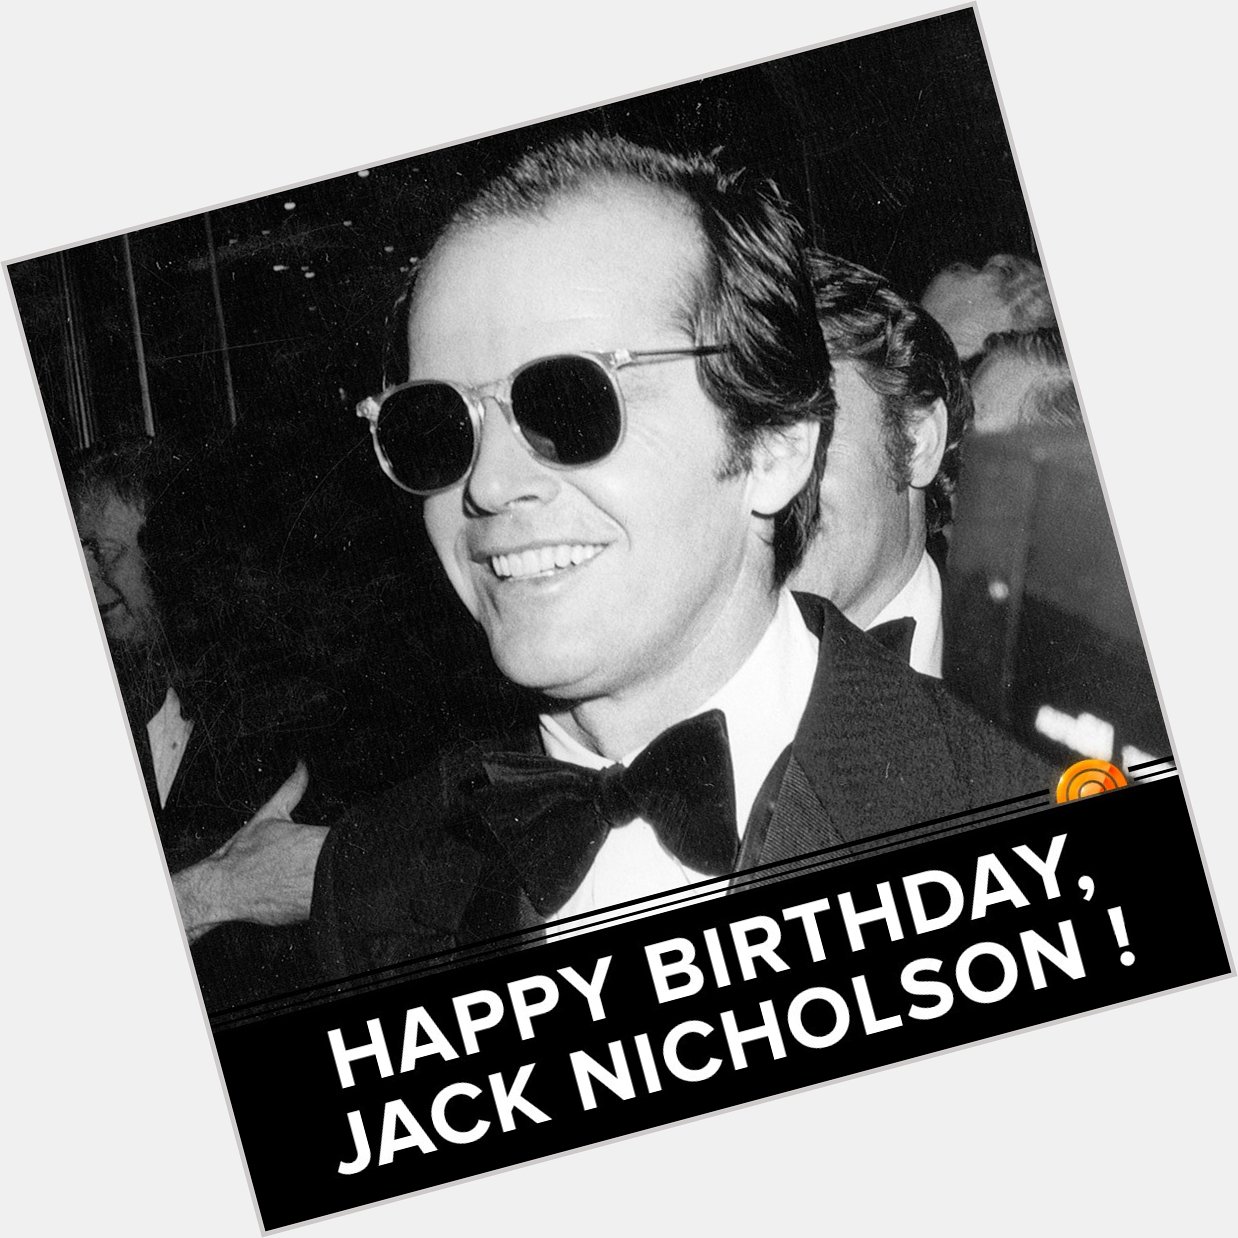 Happy 80th birthday, Jack Nicholson!  